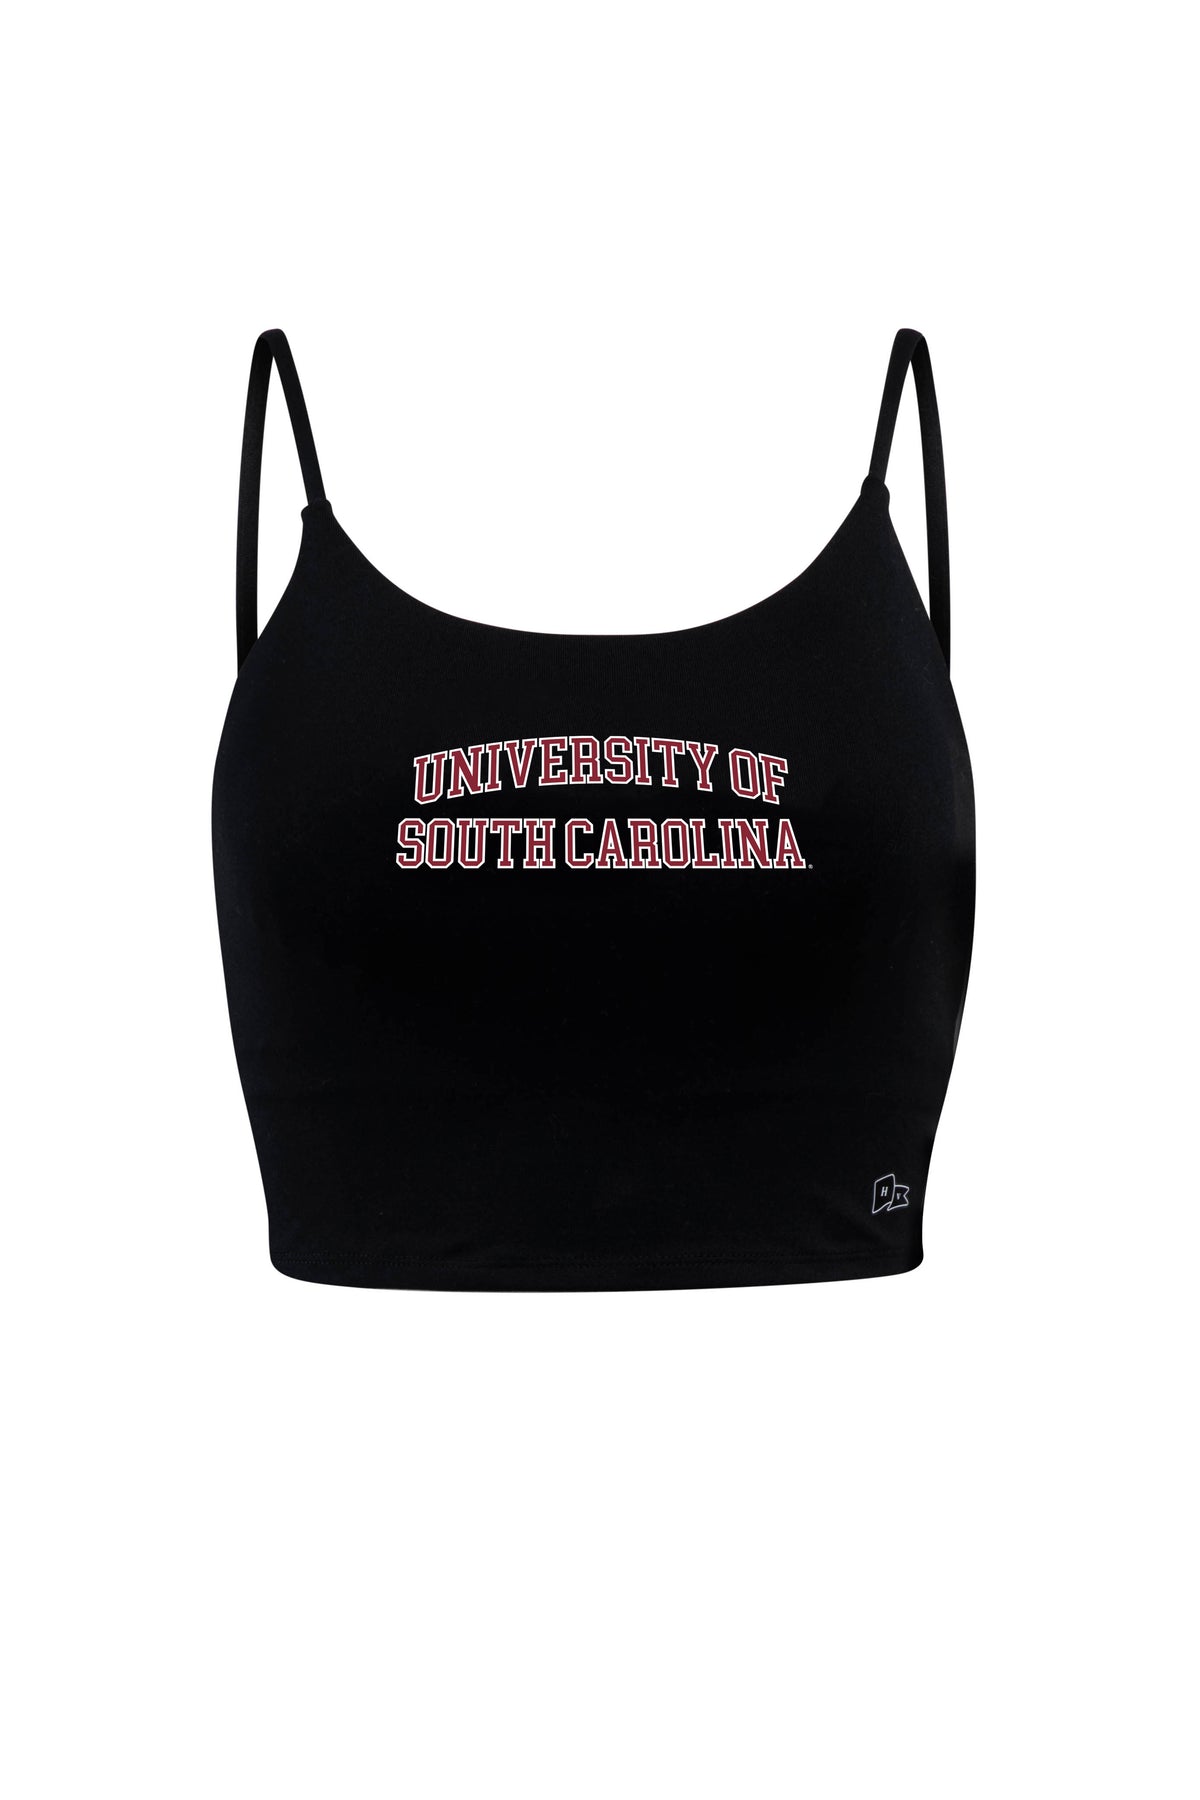 University of South Carolina Bra Tank Top